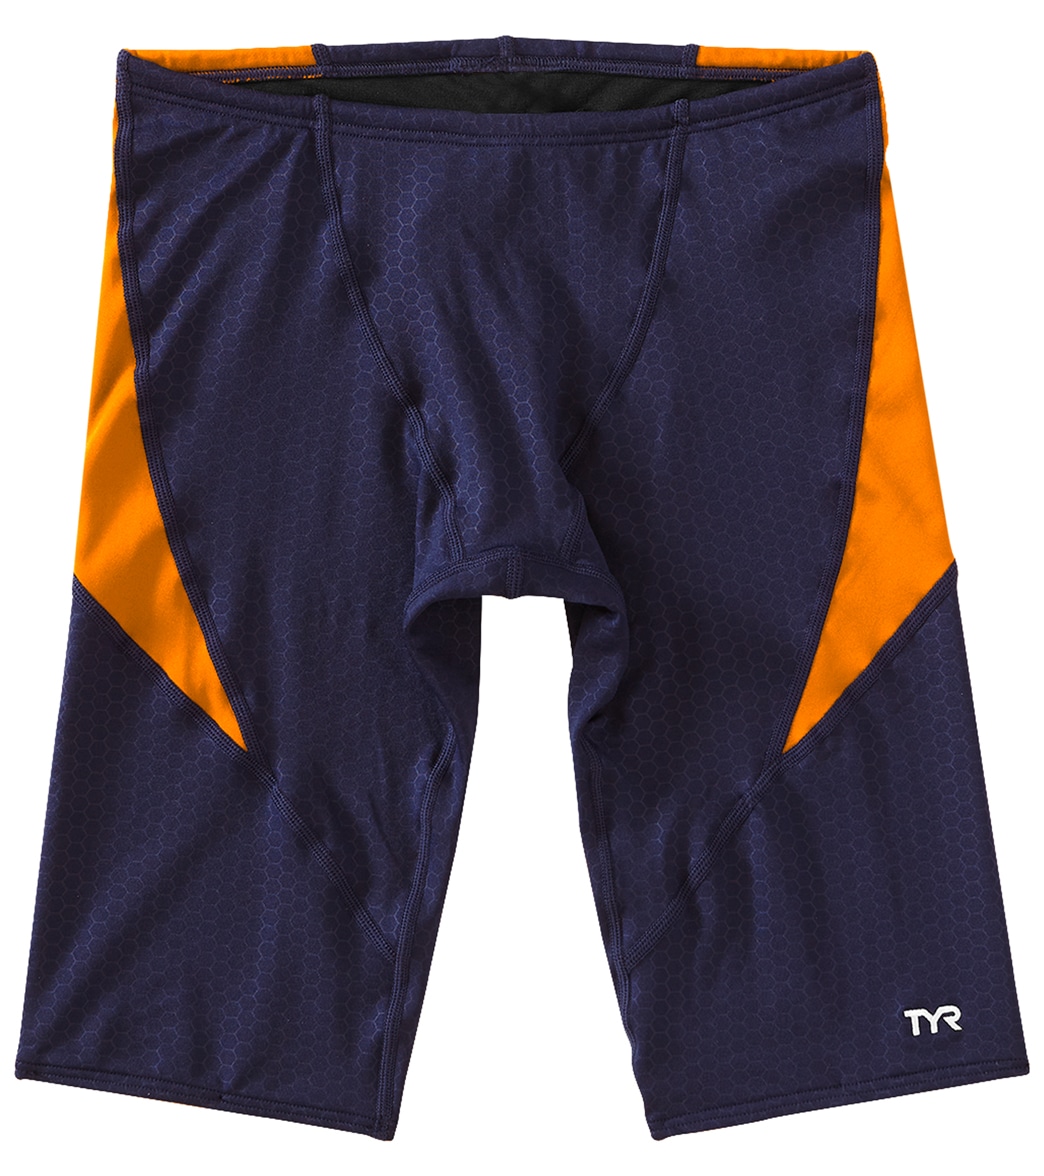 TYR Boys' Hexa Curve Splice Jammer Swimsuit - Navy/Orange 22 - Swimoutlet.com